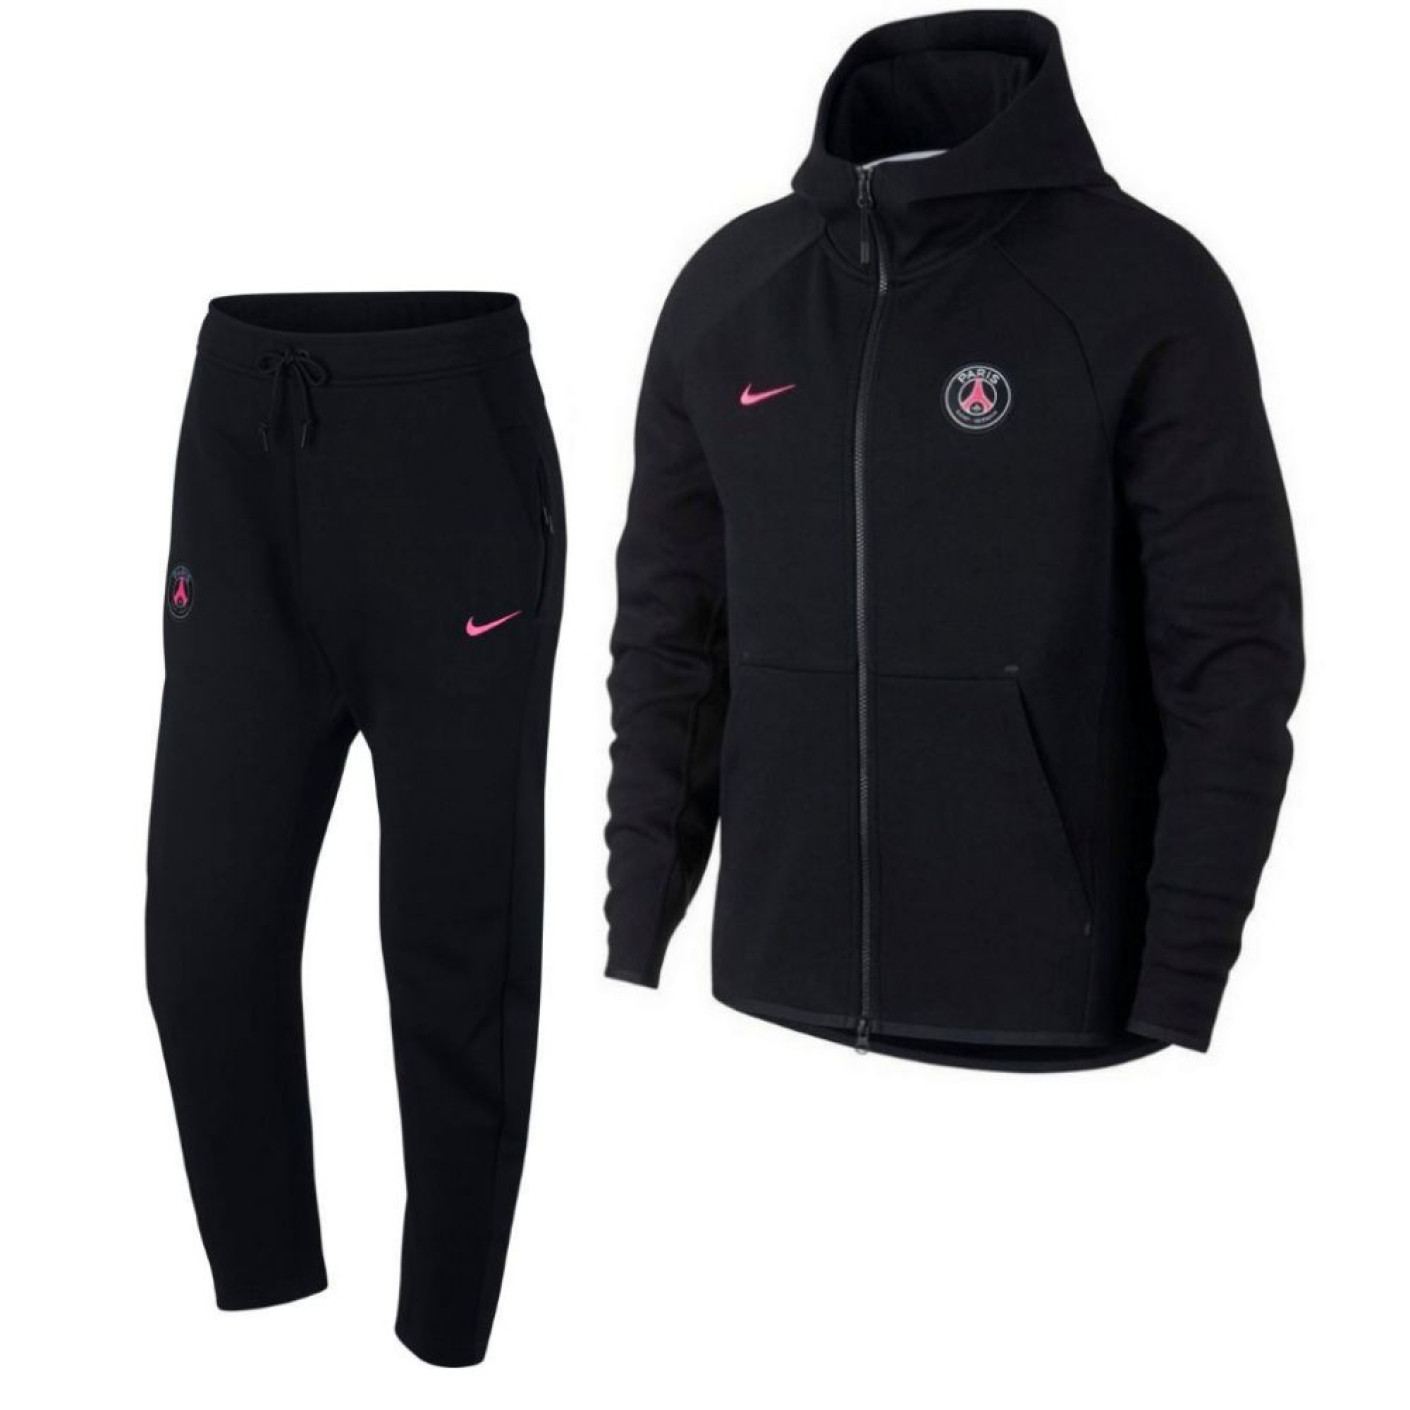 kussen Luiheid Graden Celsius Nike Paris Saint Germain Tech Fleece Trainingspak Zwart Roze